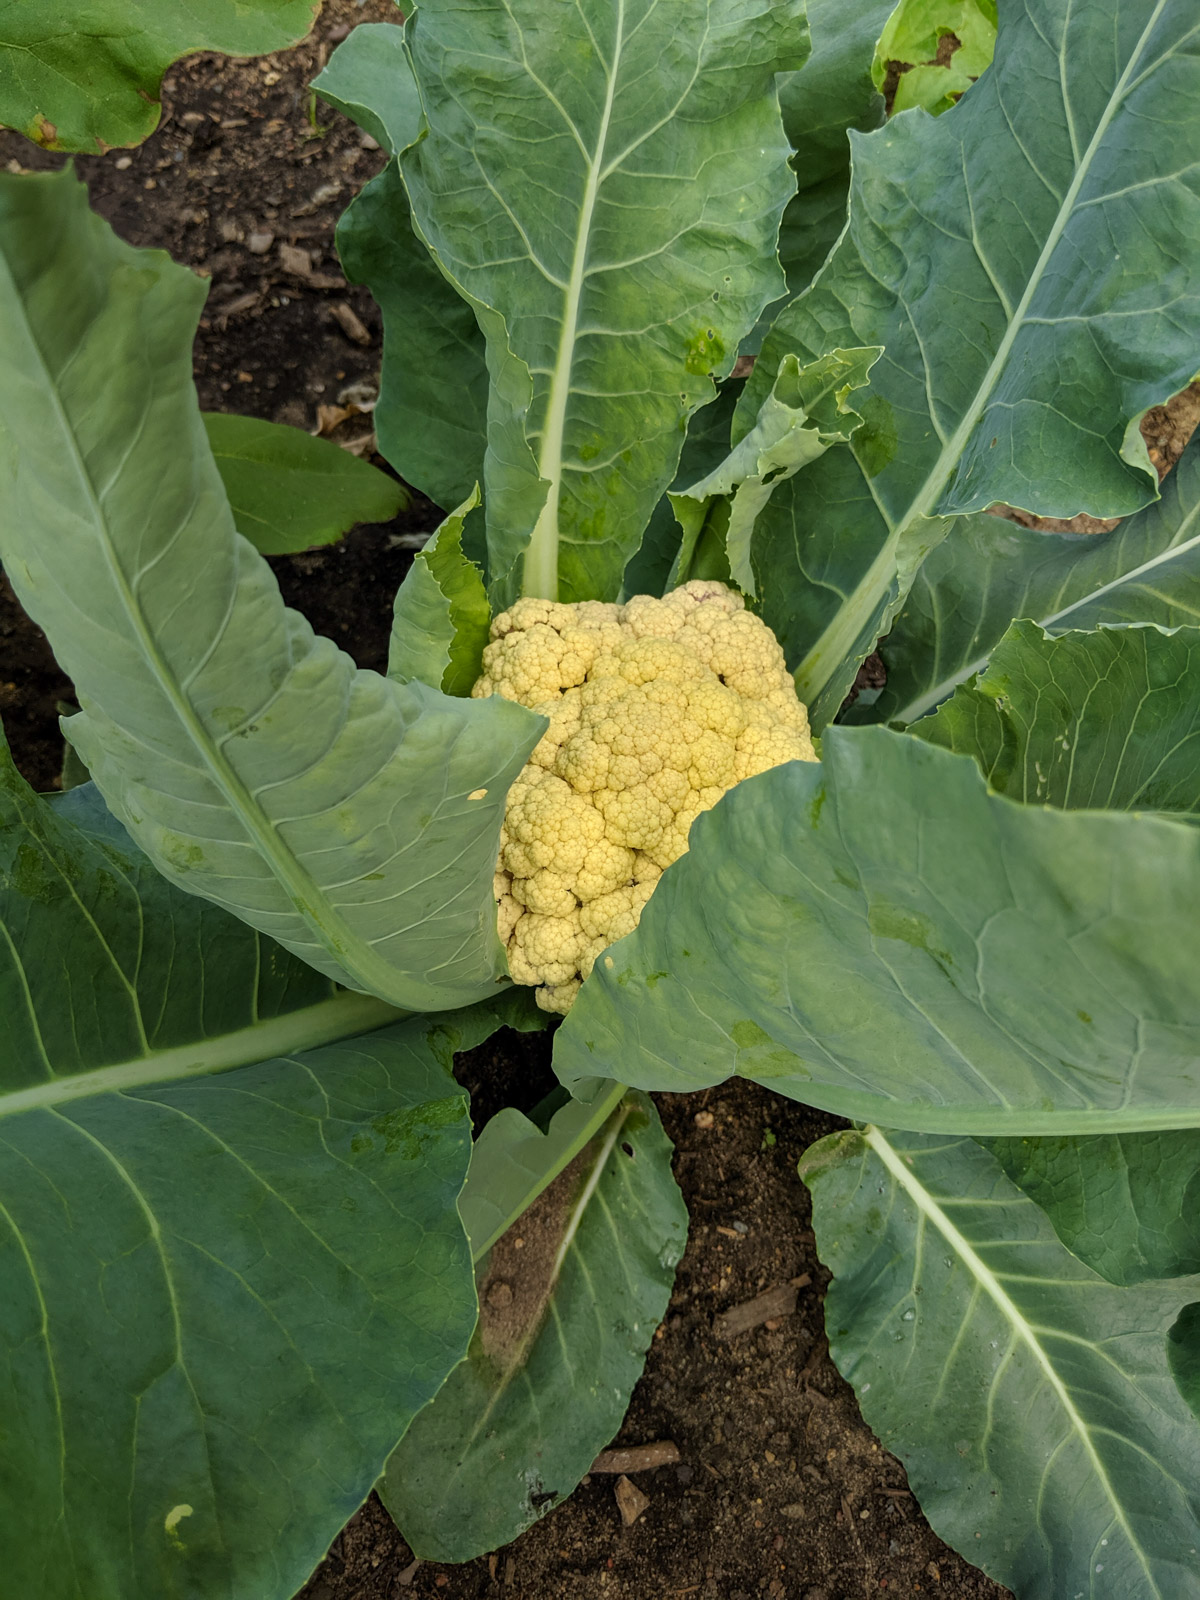 A head of cauliflower growing in the garden.